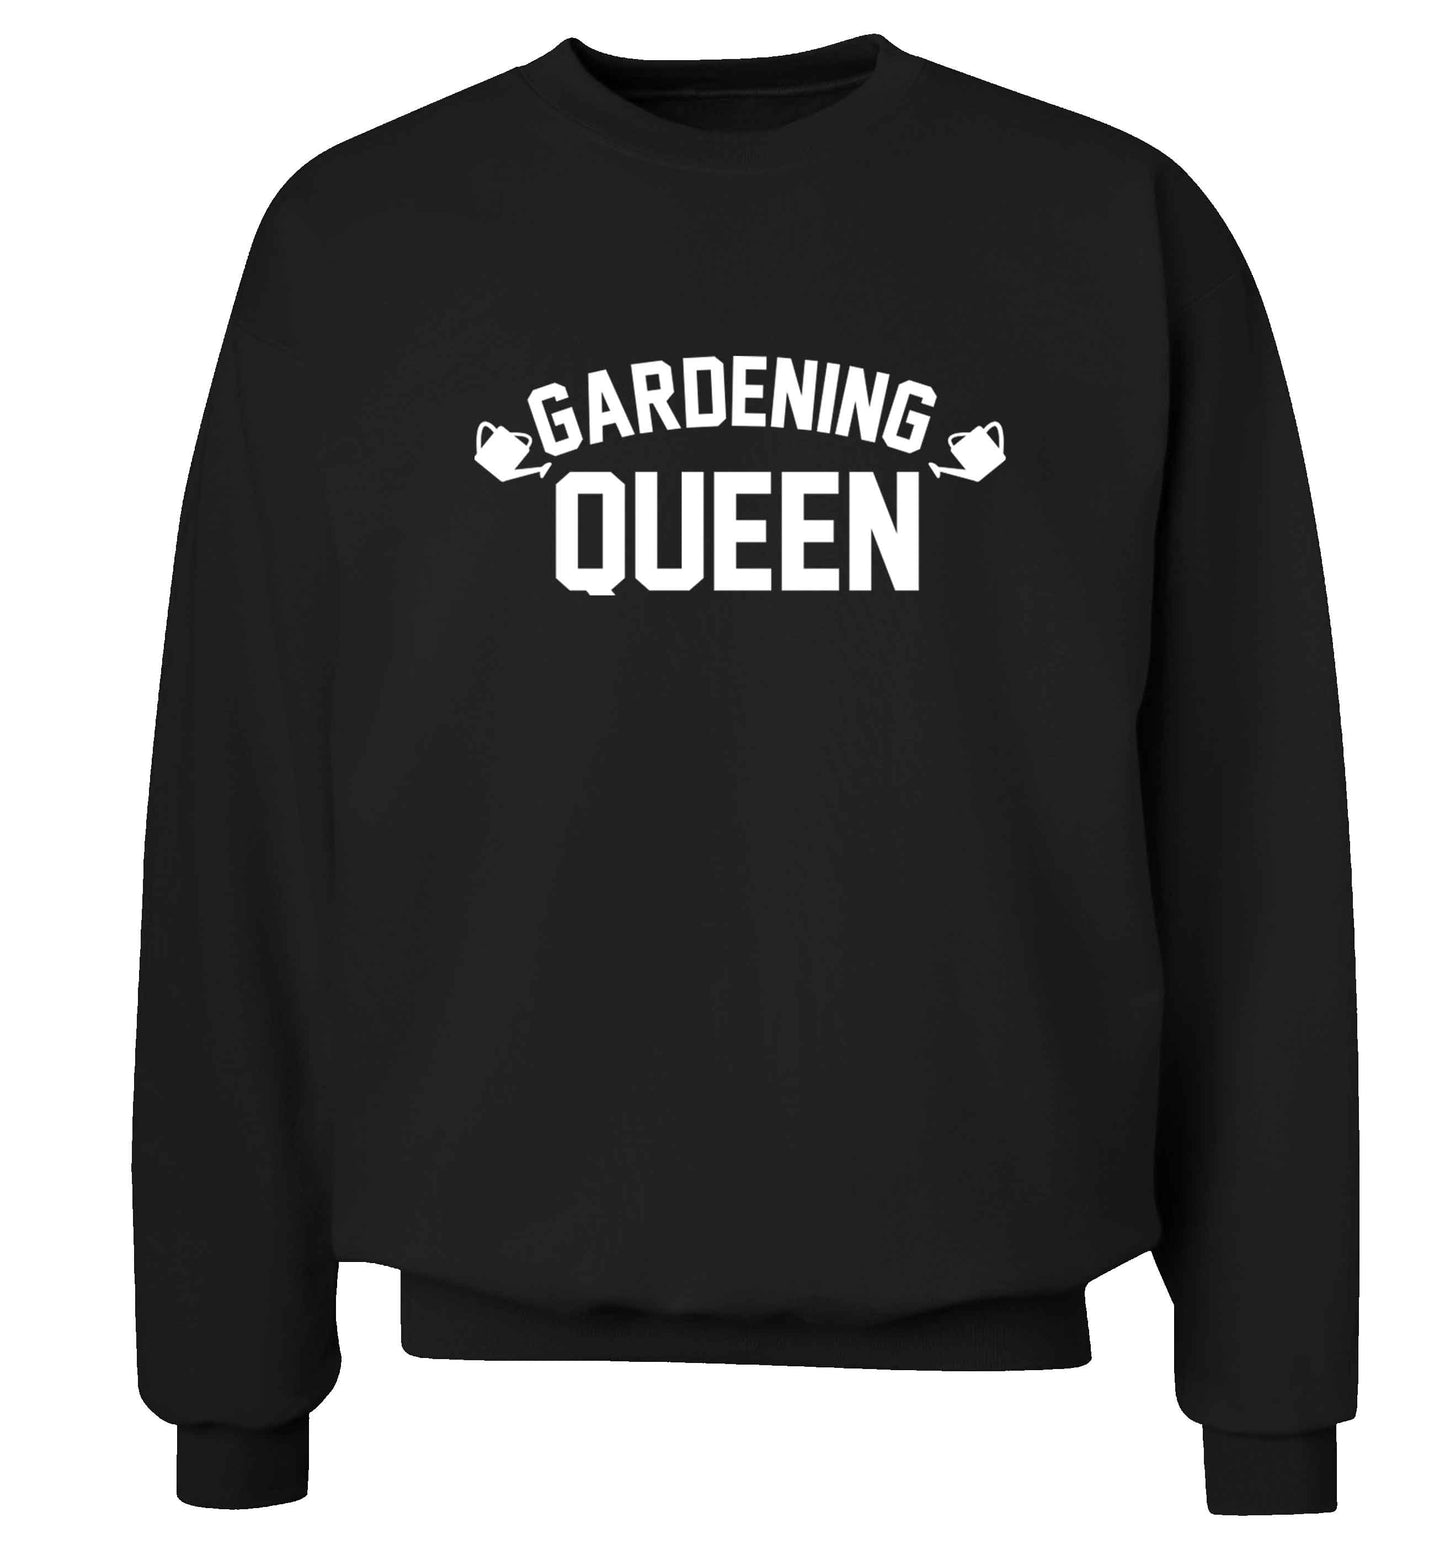 Gardening queen Adult's unisex black Sweater 2XL